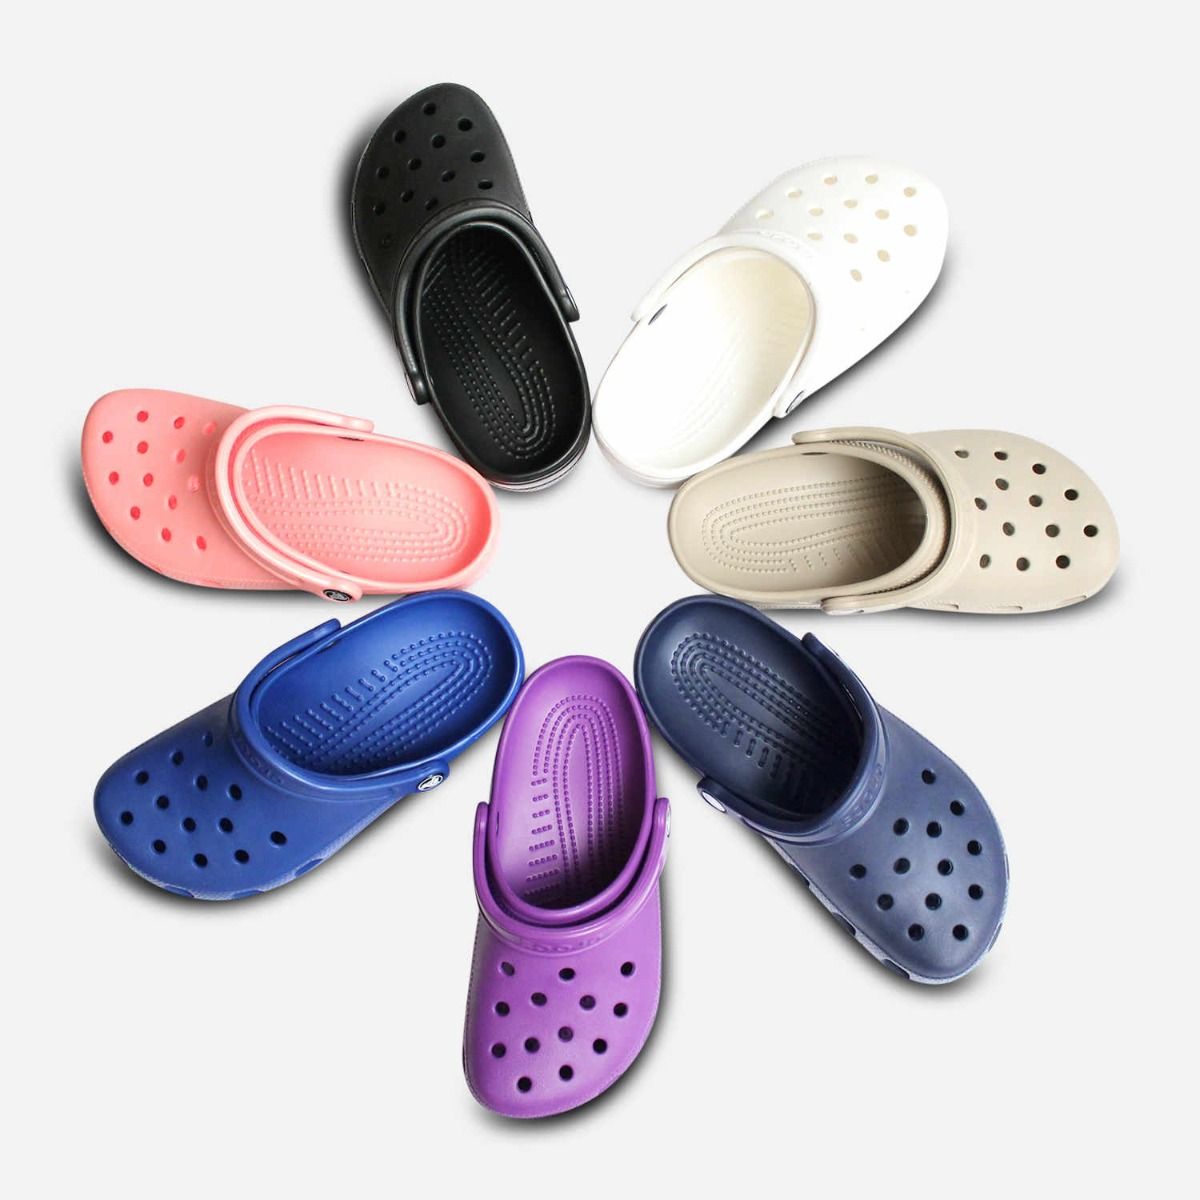 crocs shoes for women